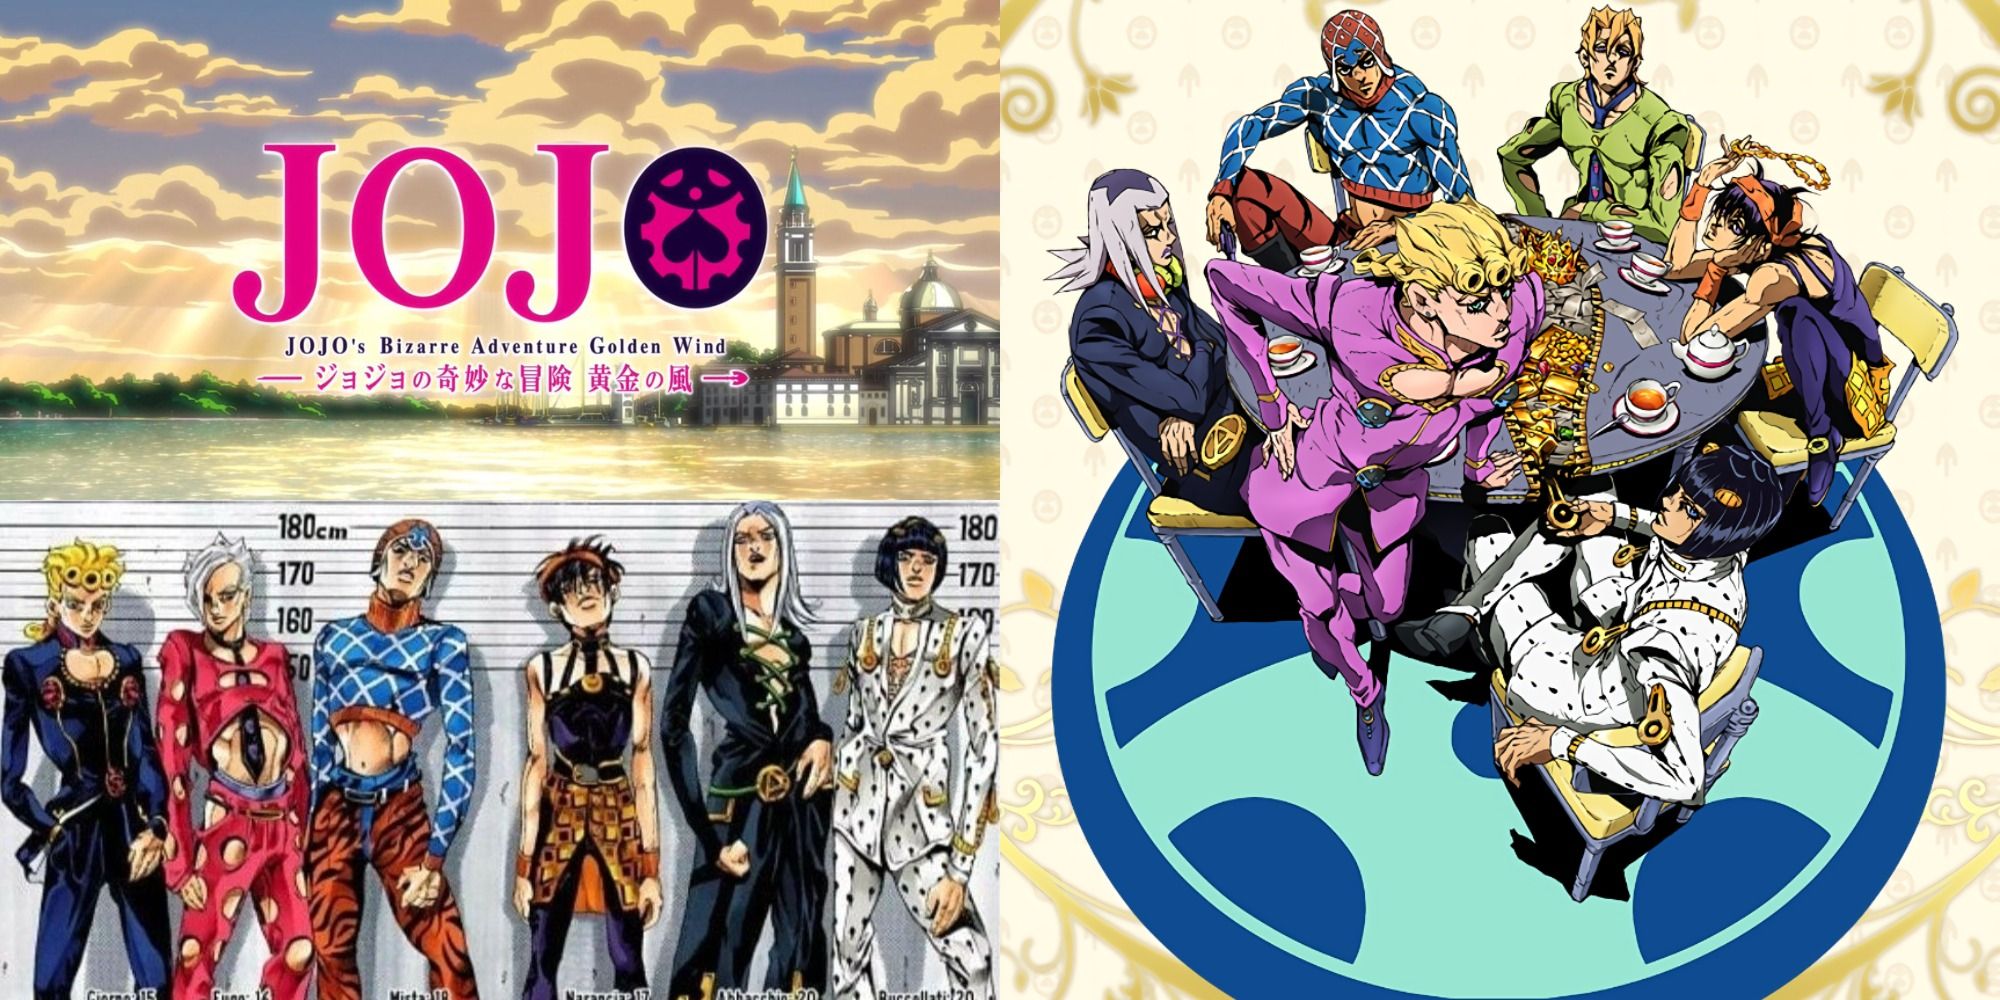 Jjba Manga Panels Wallpapers